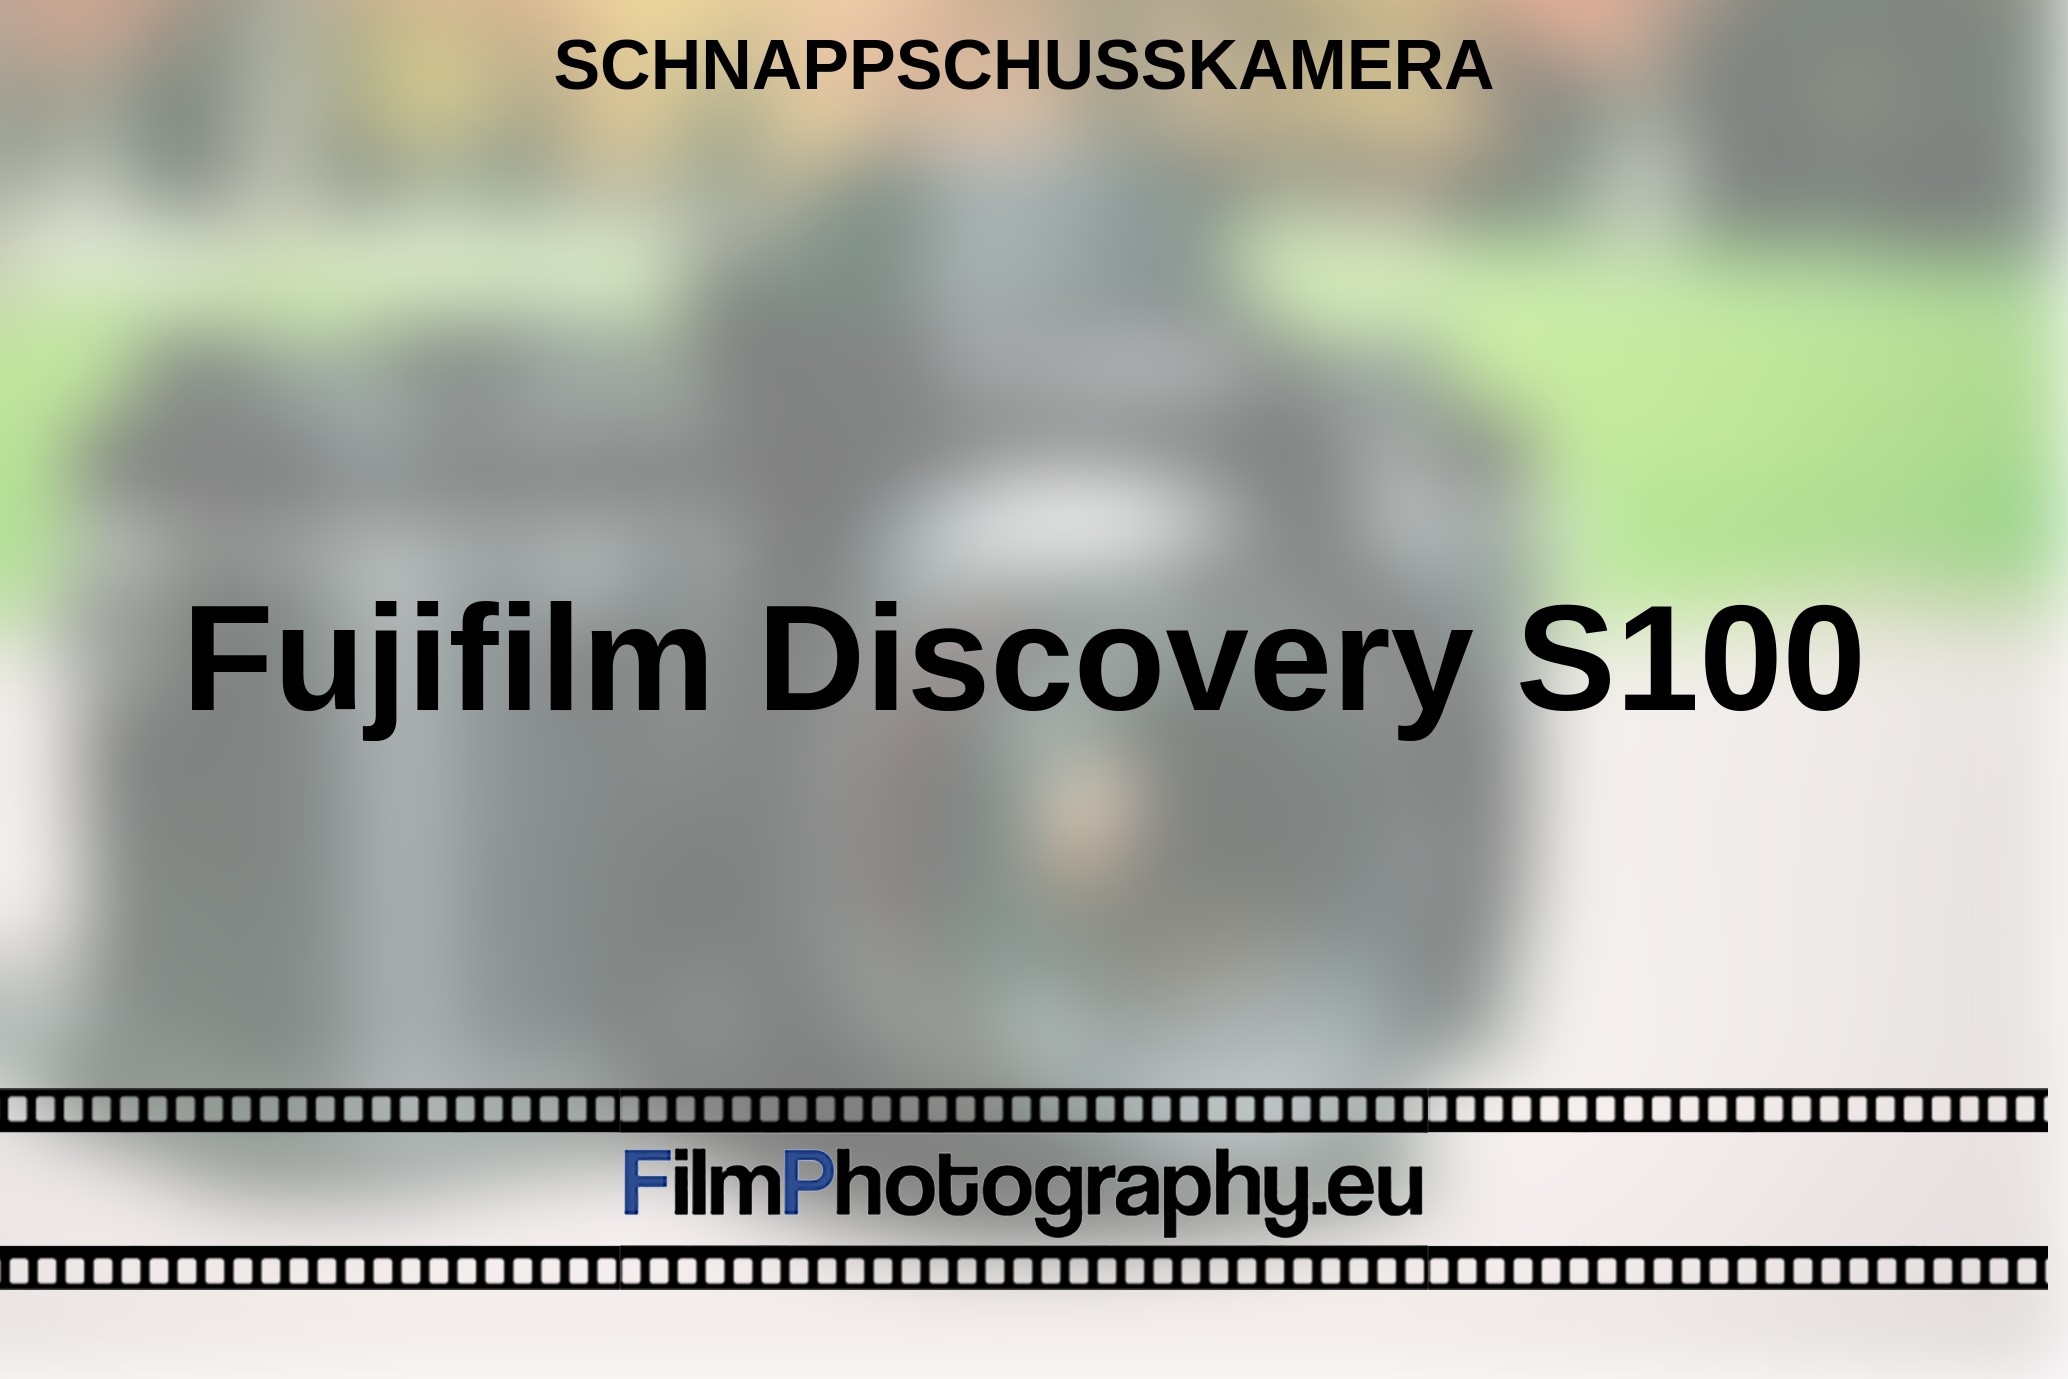 Fujifilm-Discovery-S100-Schnappschusskamera-bnv.jpg